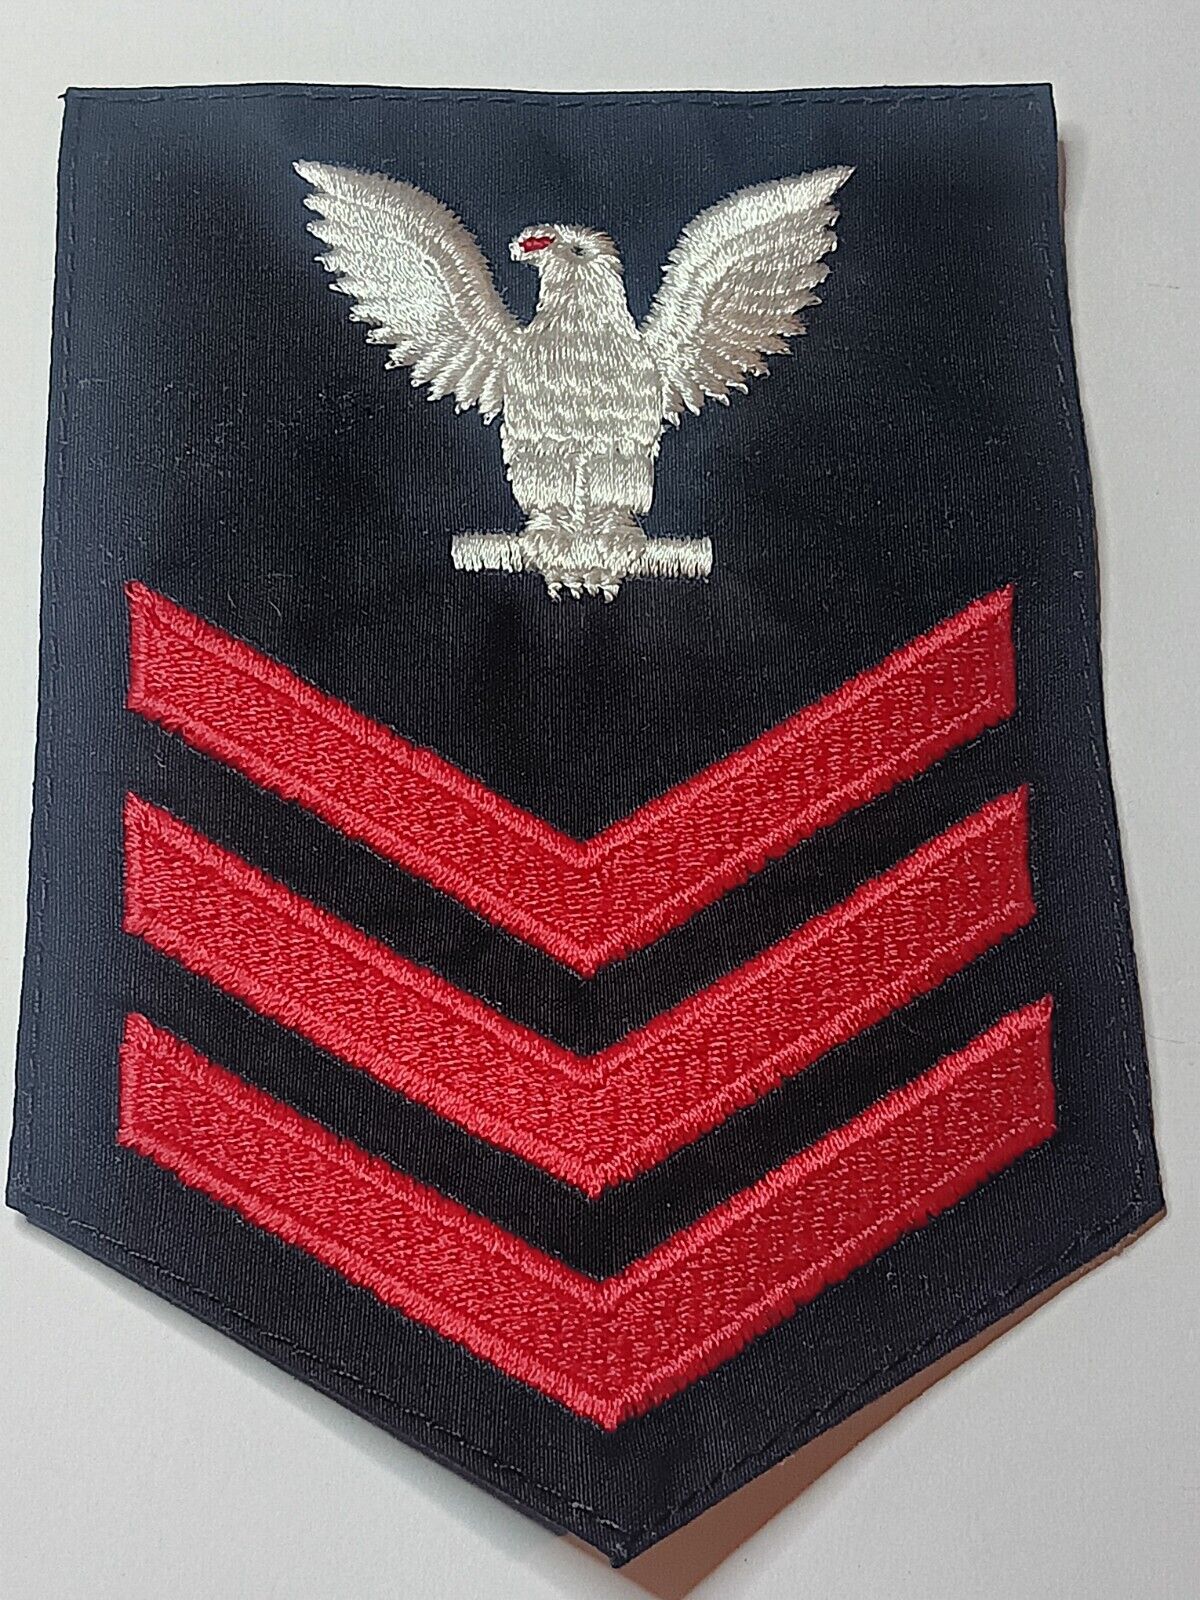 NOS U.S. NAVY PO 1st CLASS White Eagle Three Stripes on Navy Regulation Male